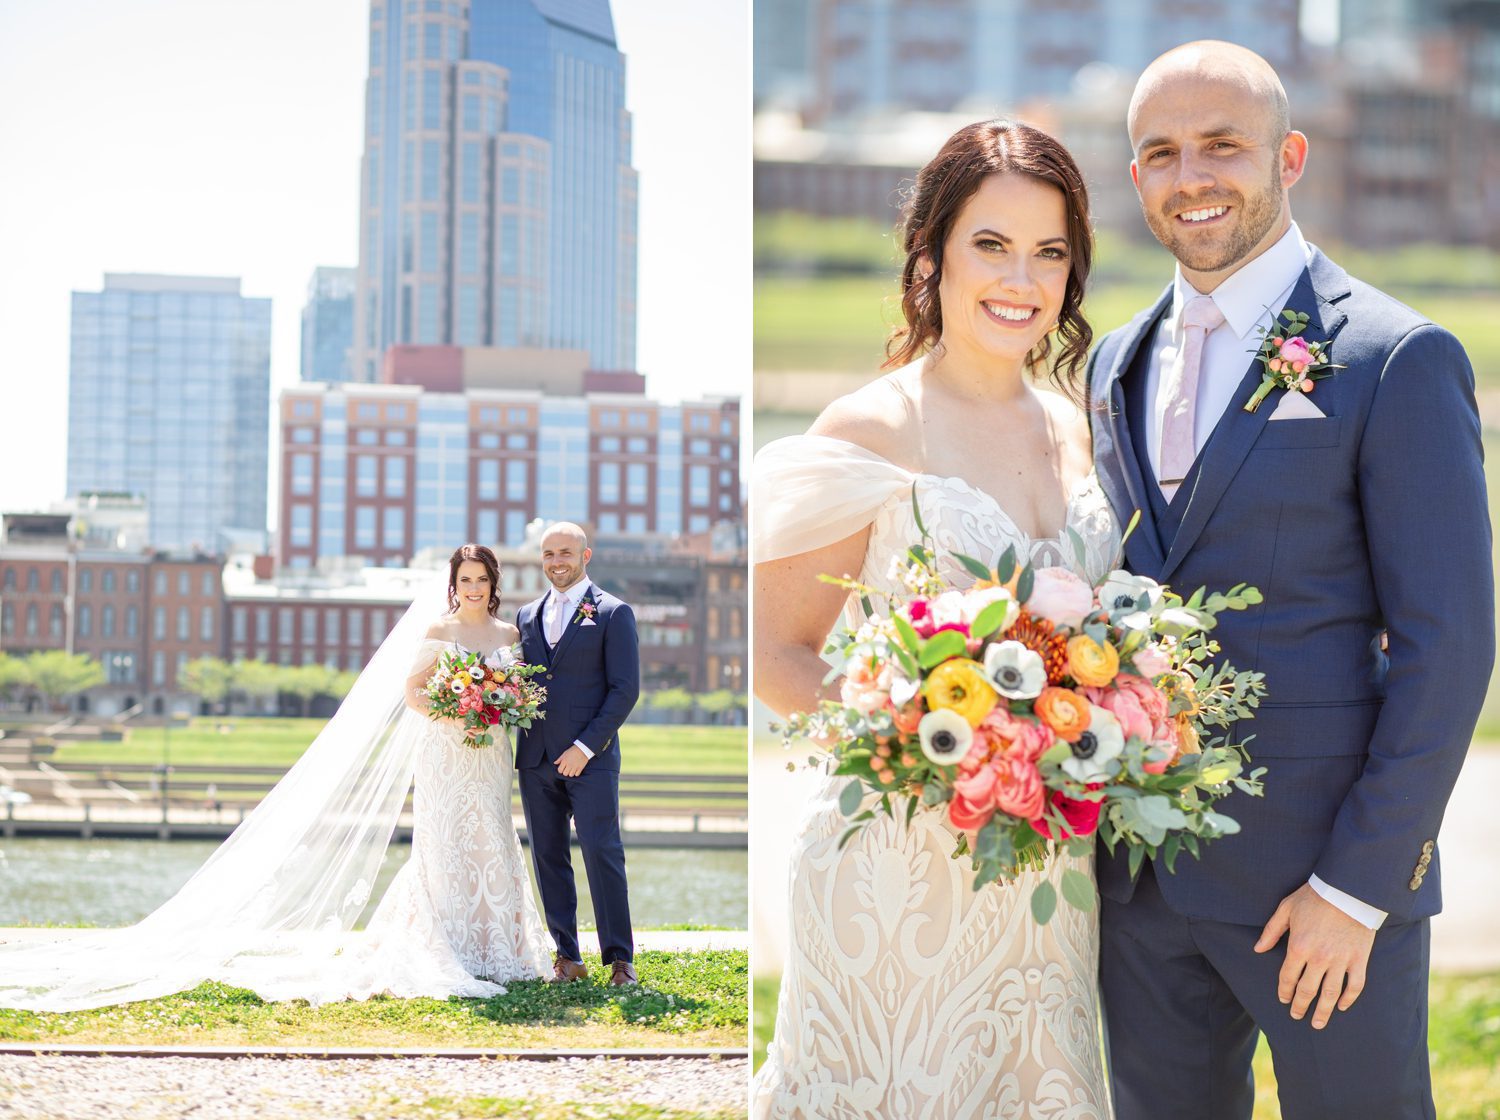 The Bridge Building Event Spaces Downtown Nashville, TN Wedding Bride and Groom Portrait Fresh by CarryAnn Flowers